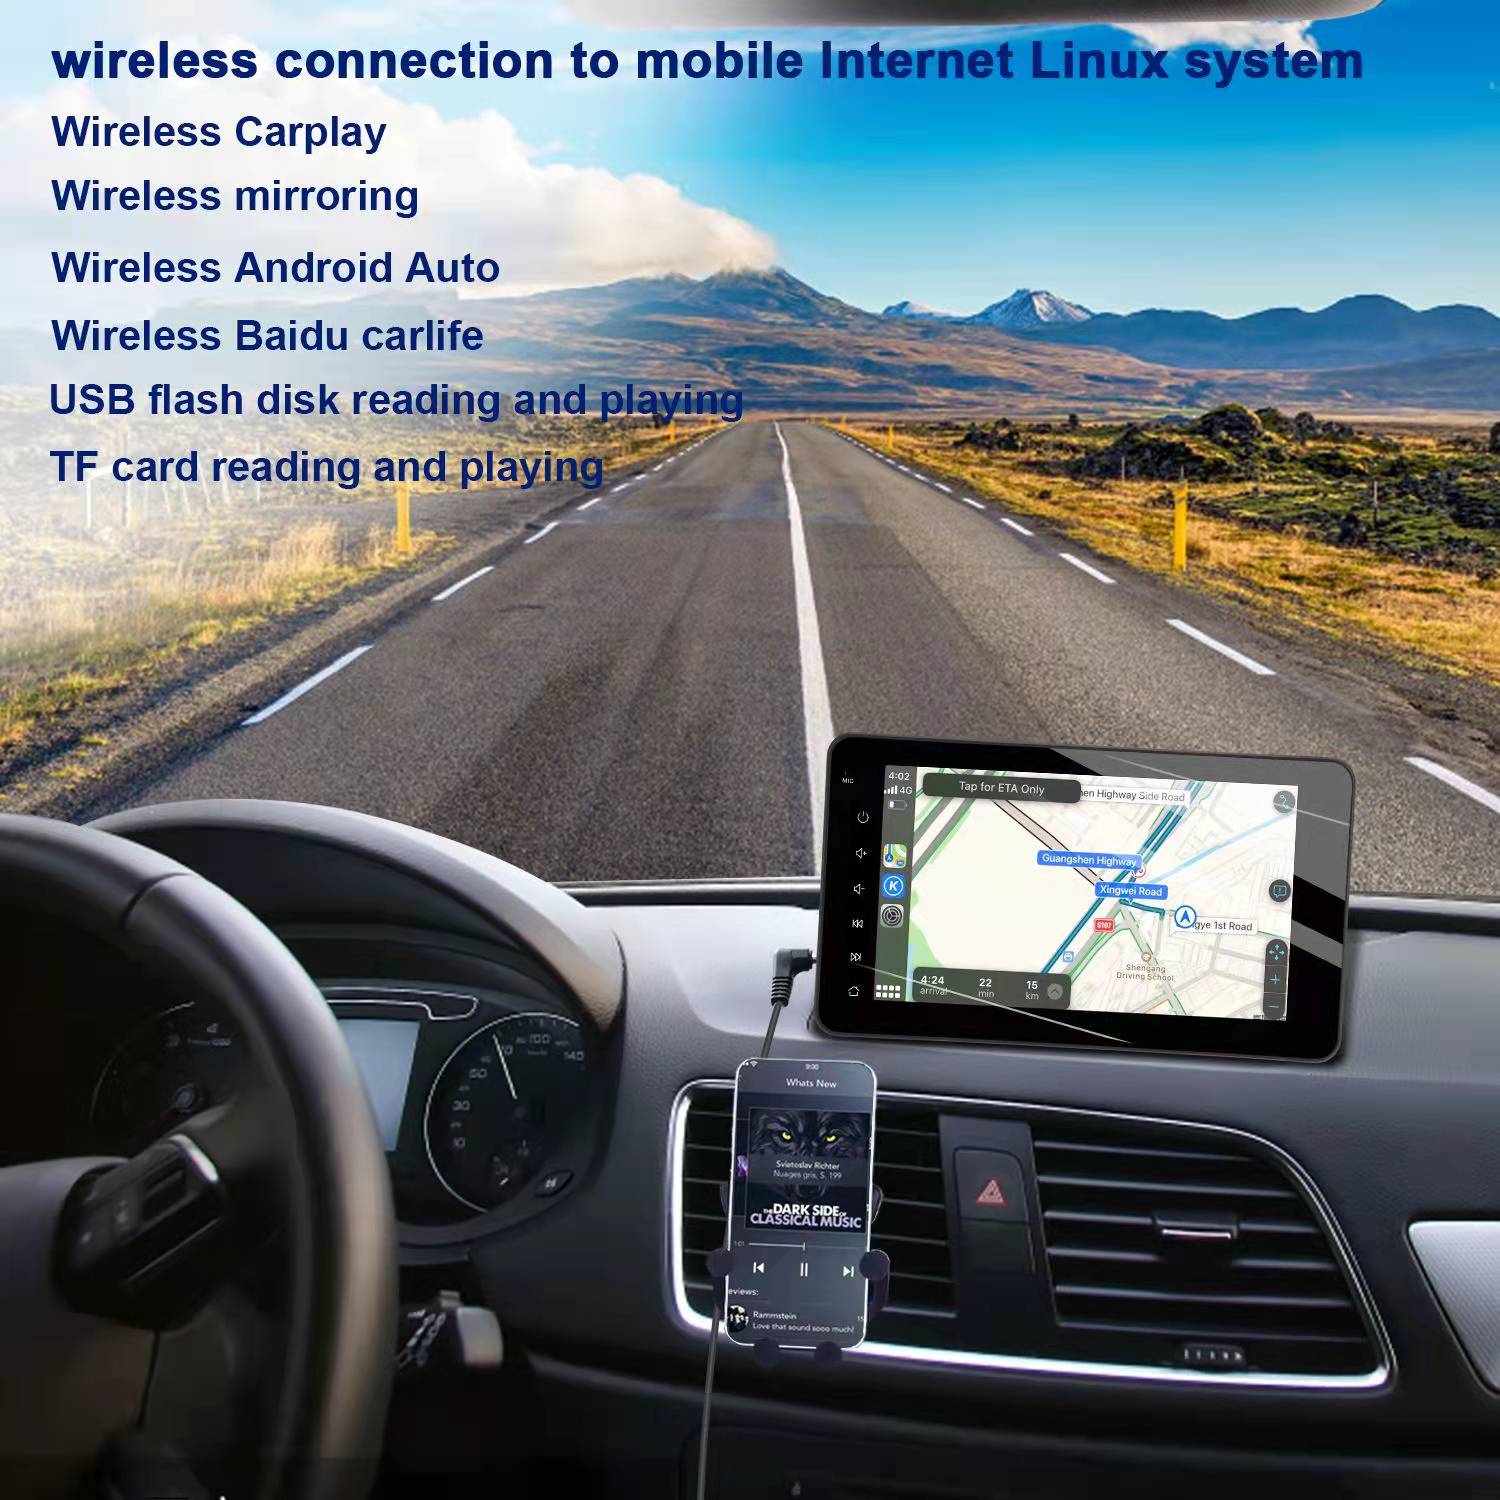 Portable-Apple-Carplay-Wireless-7-Inch-Car-Monitor-LCD-Screen-Mirror-Link-Multimedia-Video-Players (3)